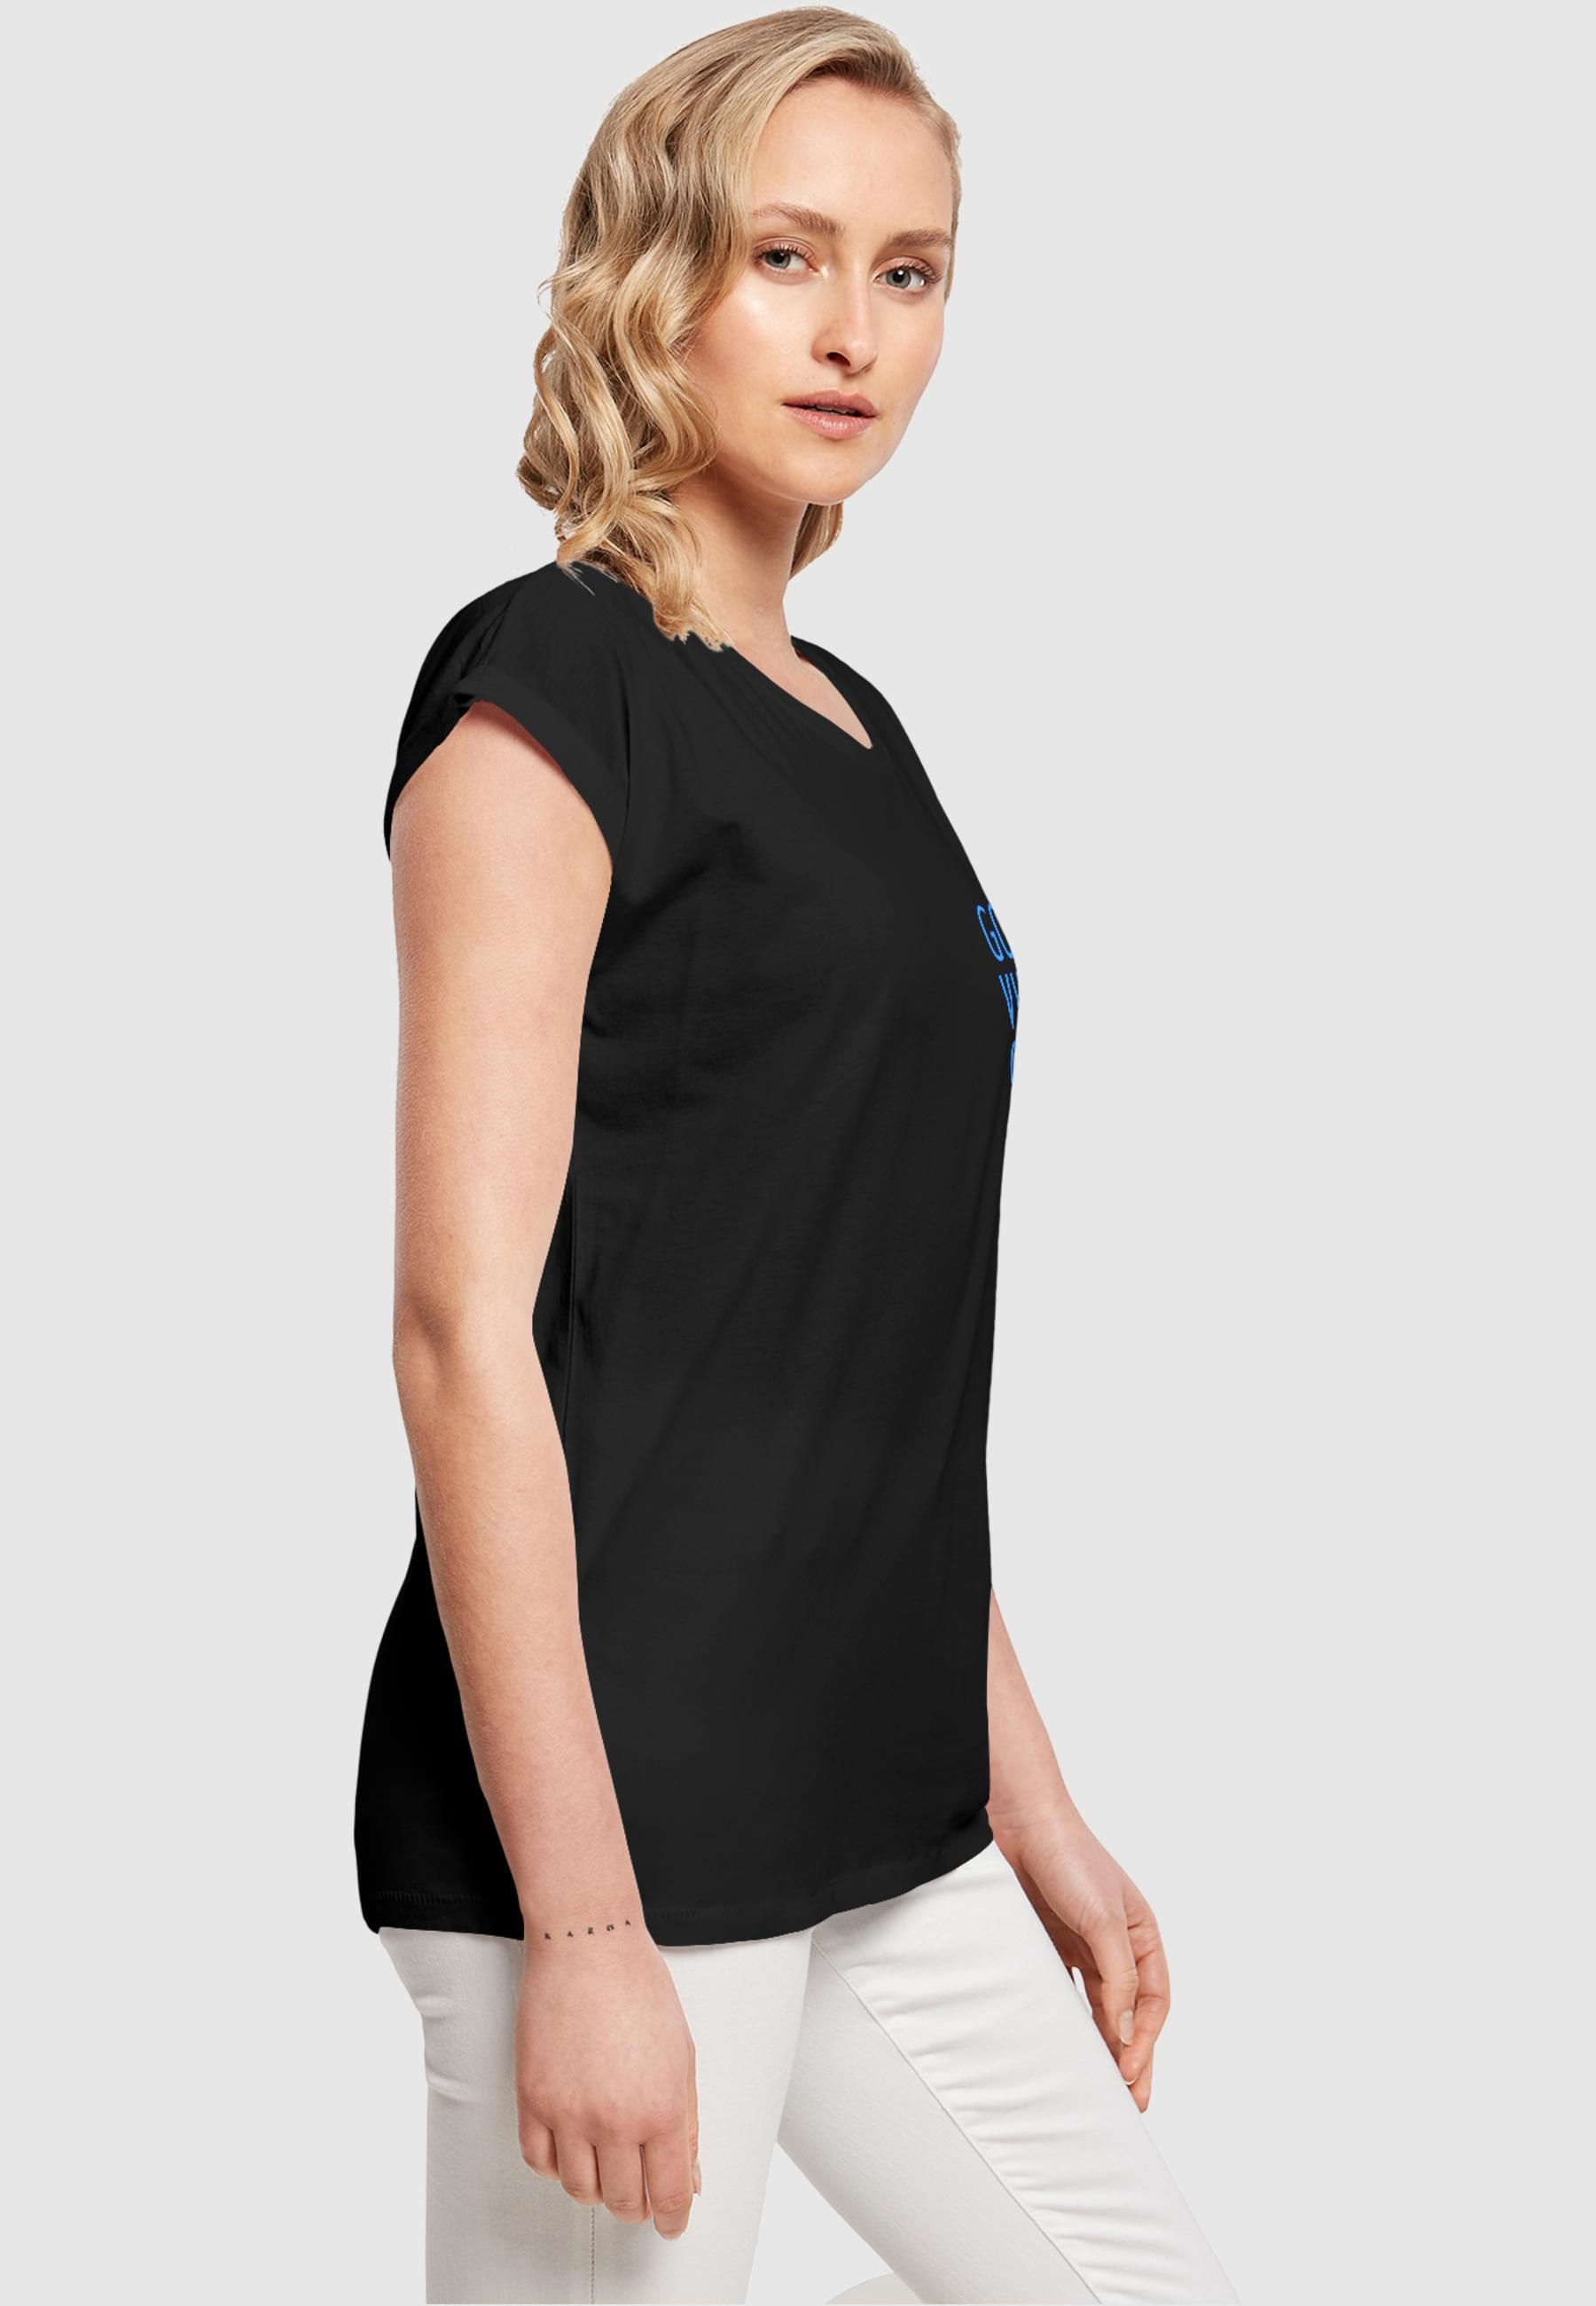 Merchcode T-Shirt »Merchcode Damen Ladies Good Vibes Only Extended Shoulder Tee«, (1 tlg.)